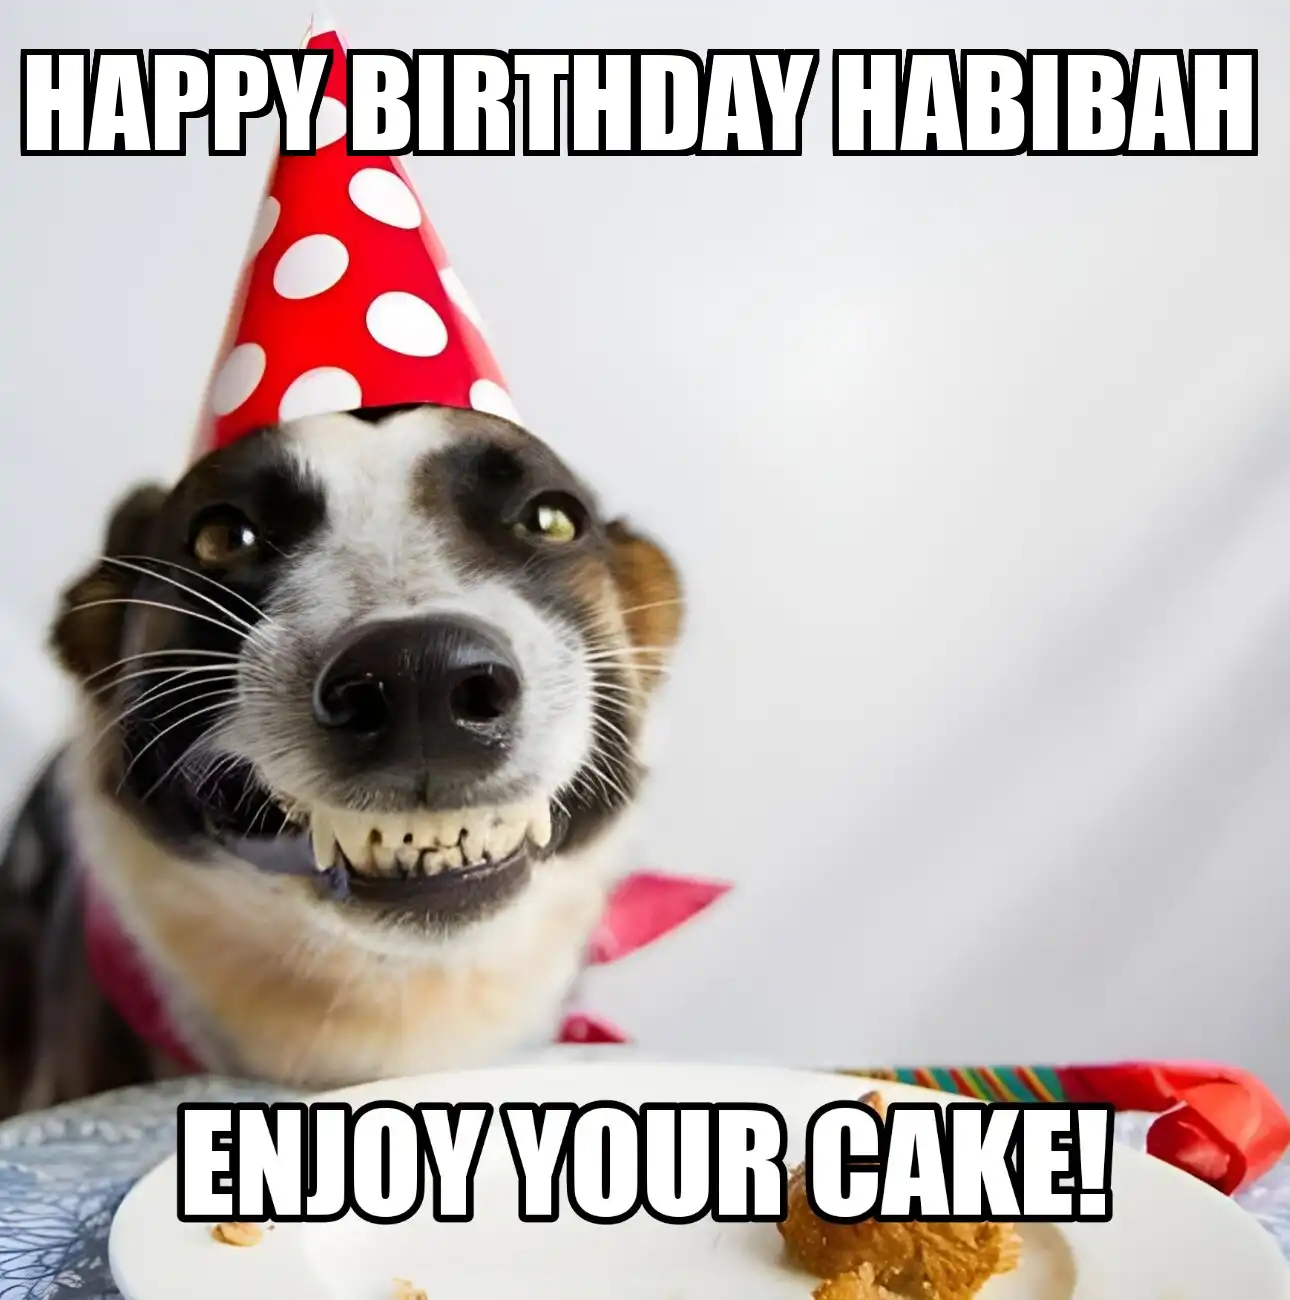 Happy Birthday Habibah Enjoy Your Cake Dog Meme